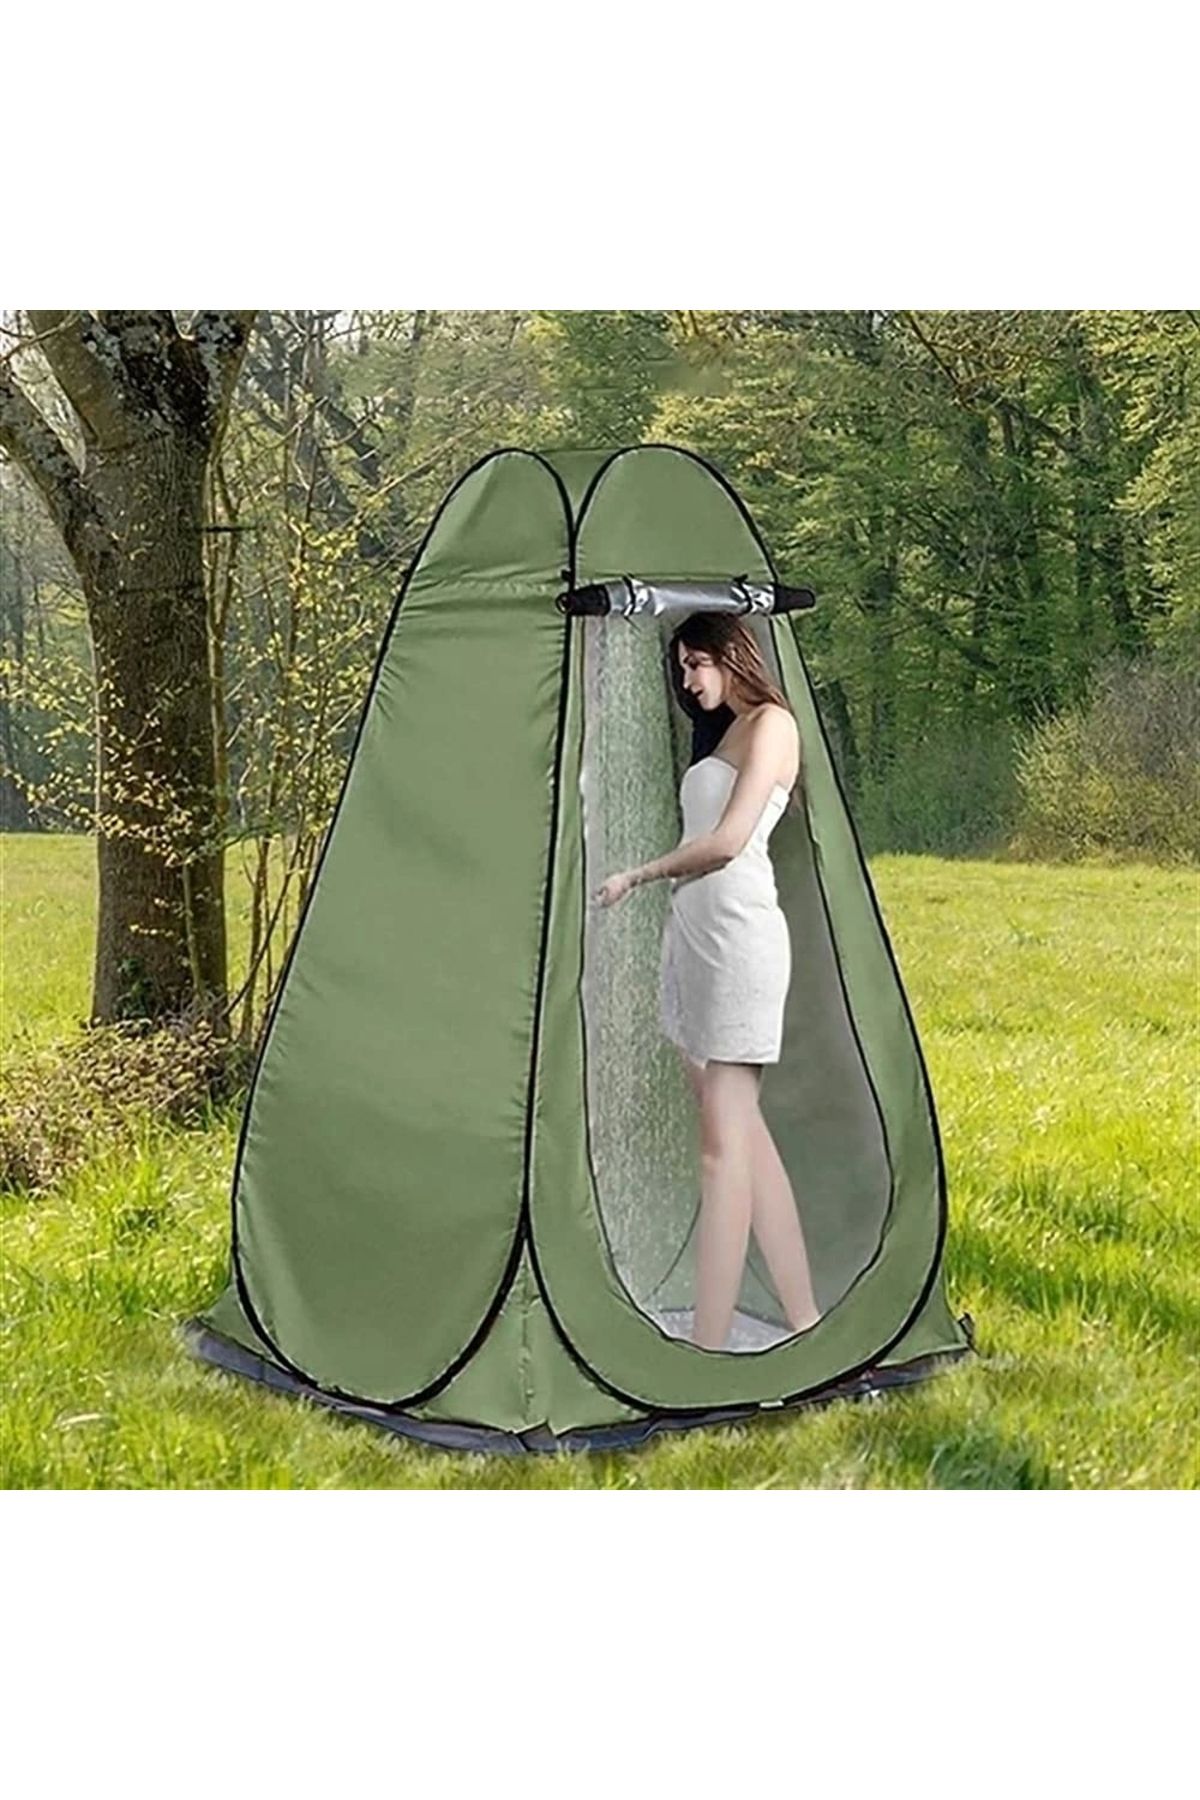 COMFONİ Kamp Alanı Duş Giyinme Wc Çadırı Fotoğrafcı Prova Kabini 190x120x120